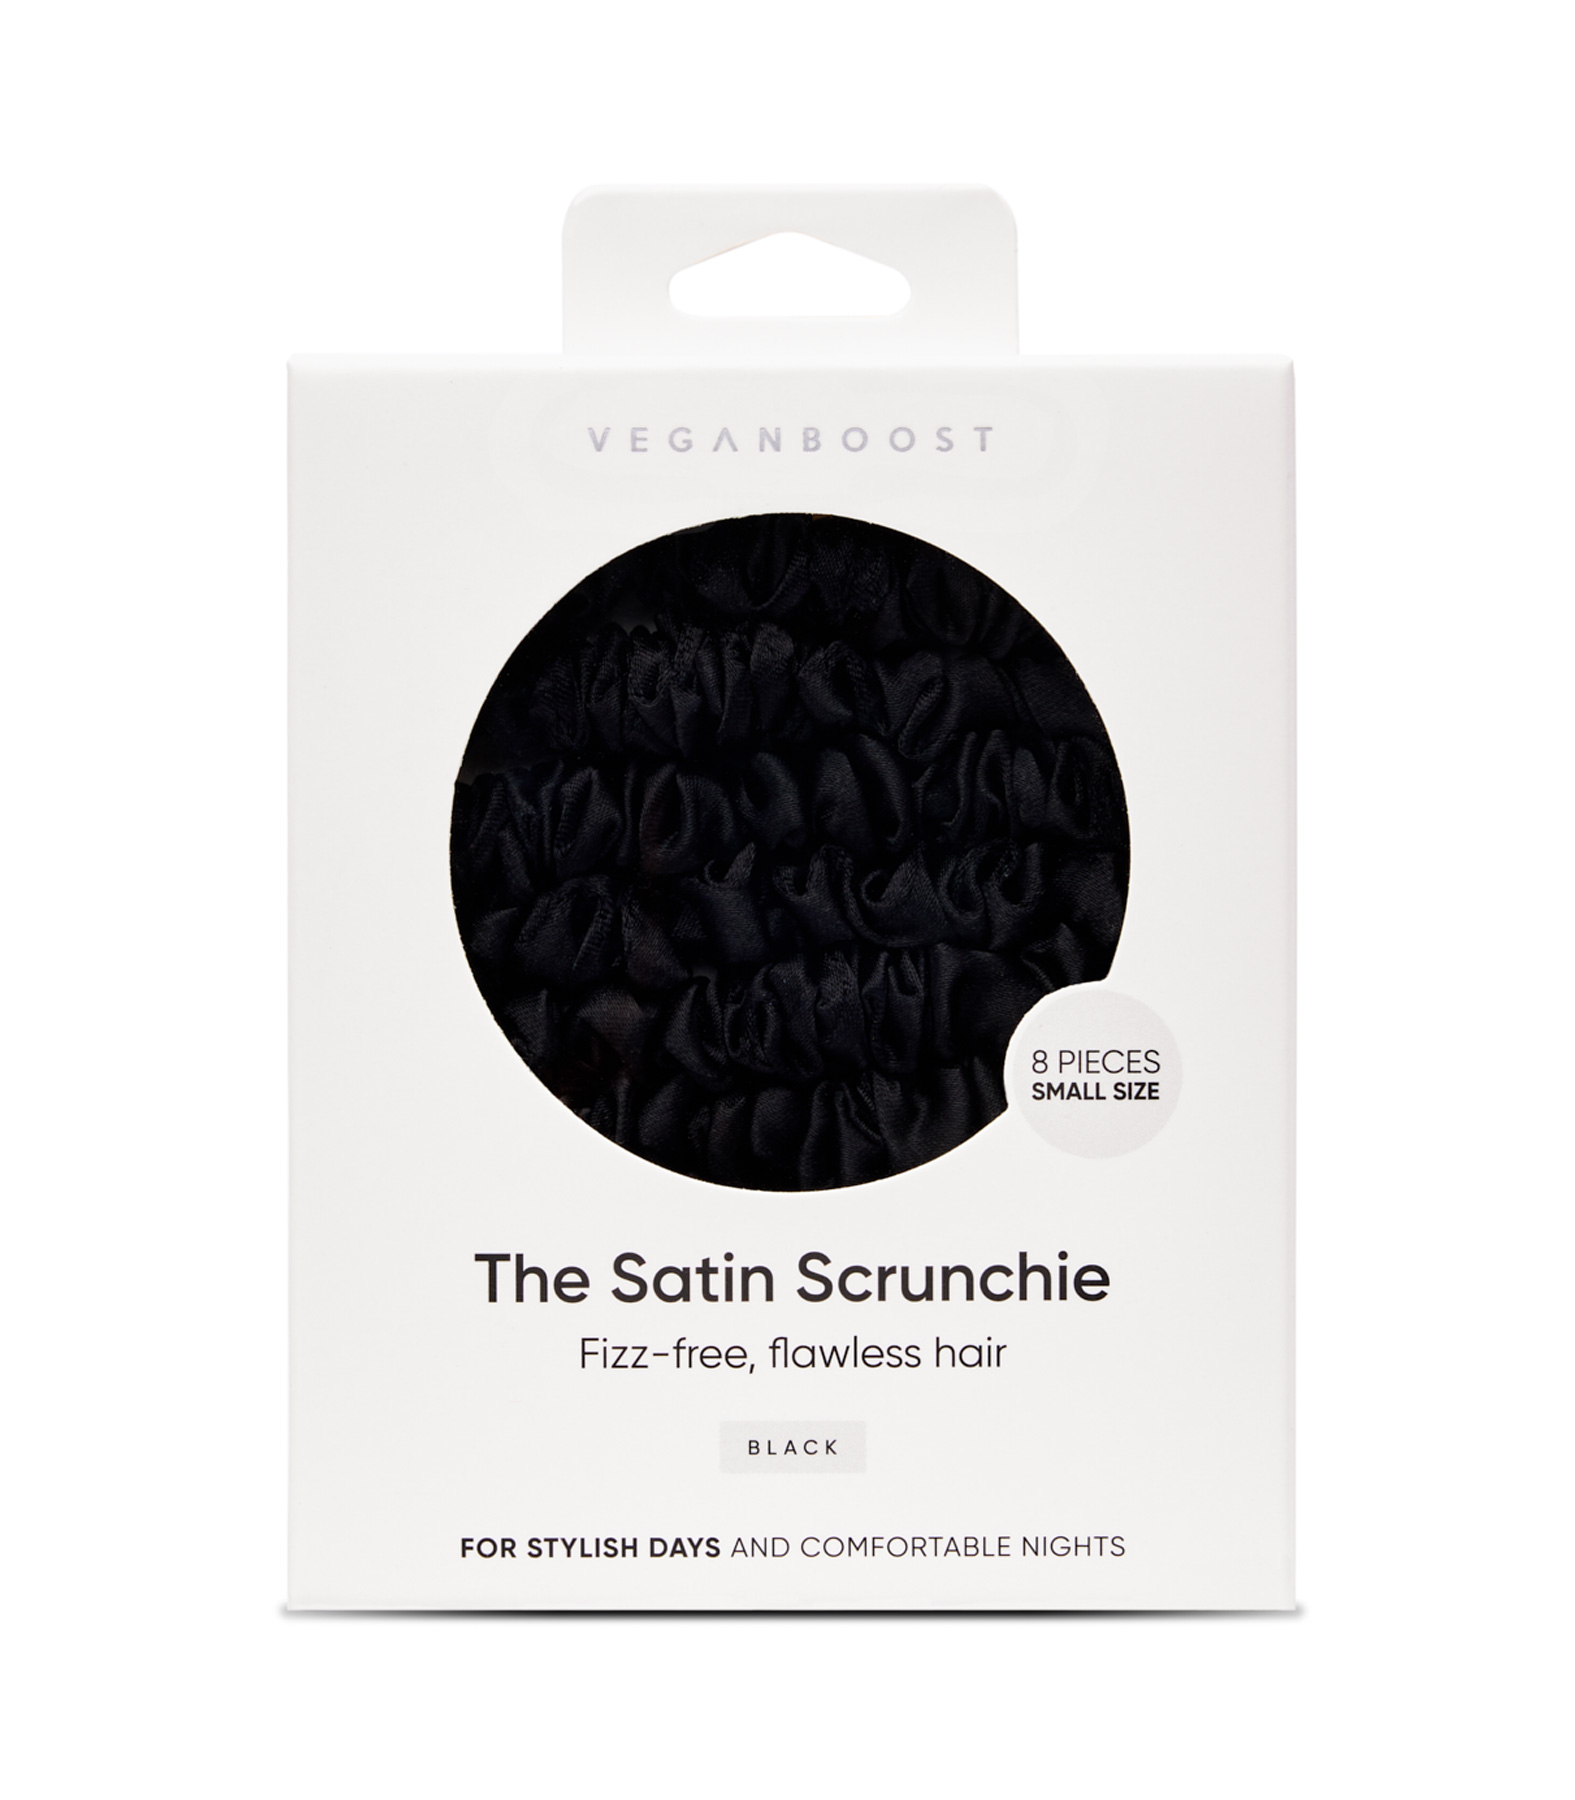 Veganboost Satin Scrunchies Black Small Size